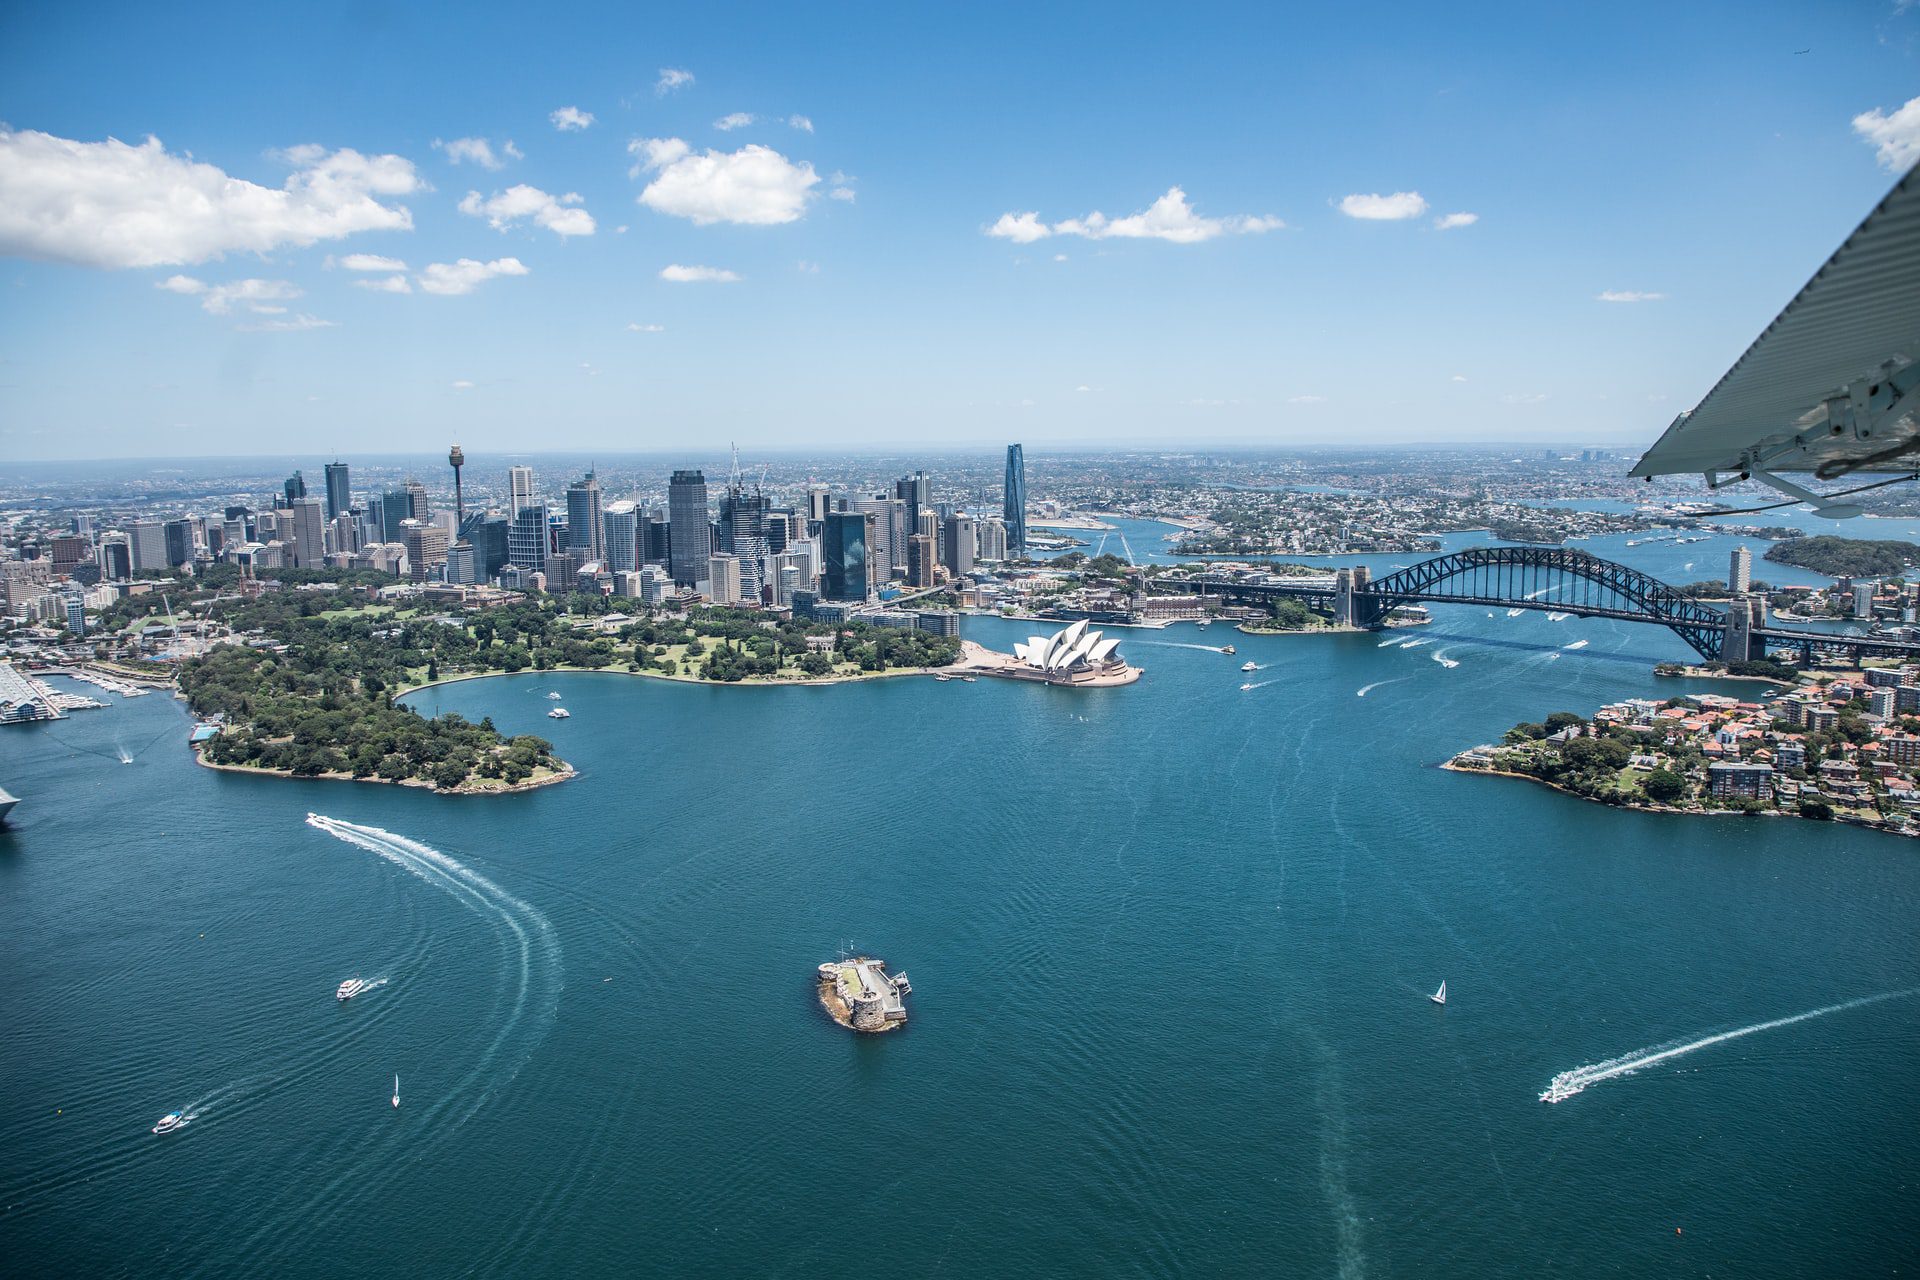 Qantas will operate three weekly return flights between Sydney and London and three weekly return flights between Sydney and Los Angeles starting Nov. 14.